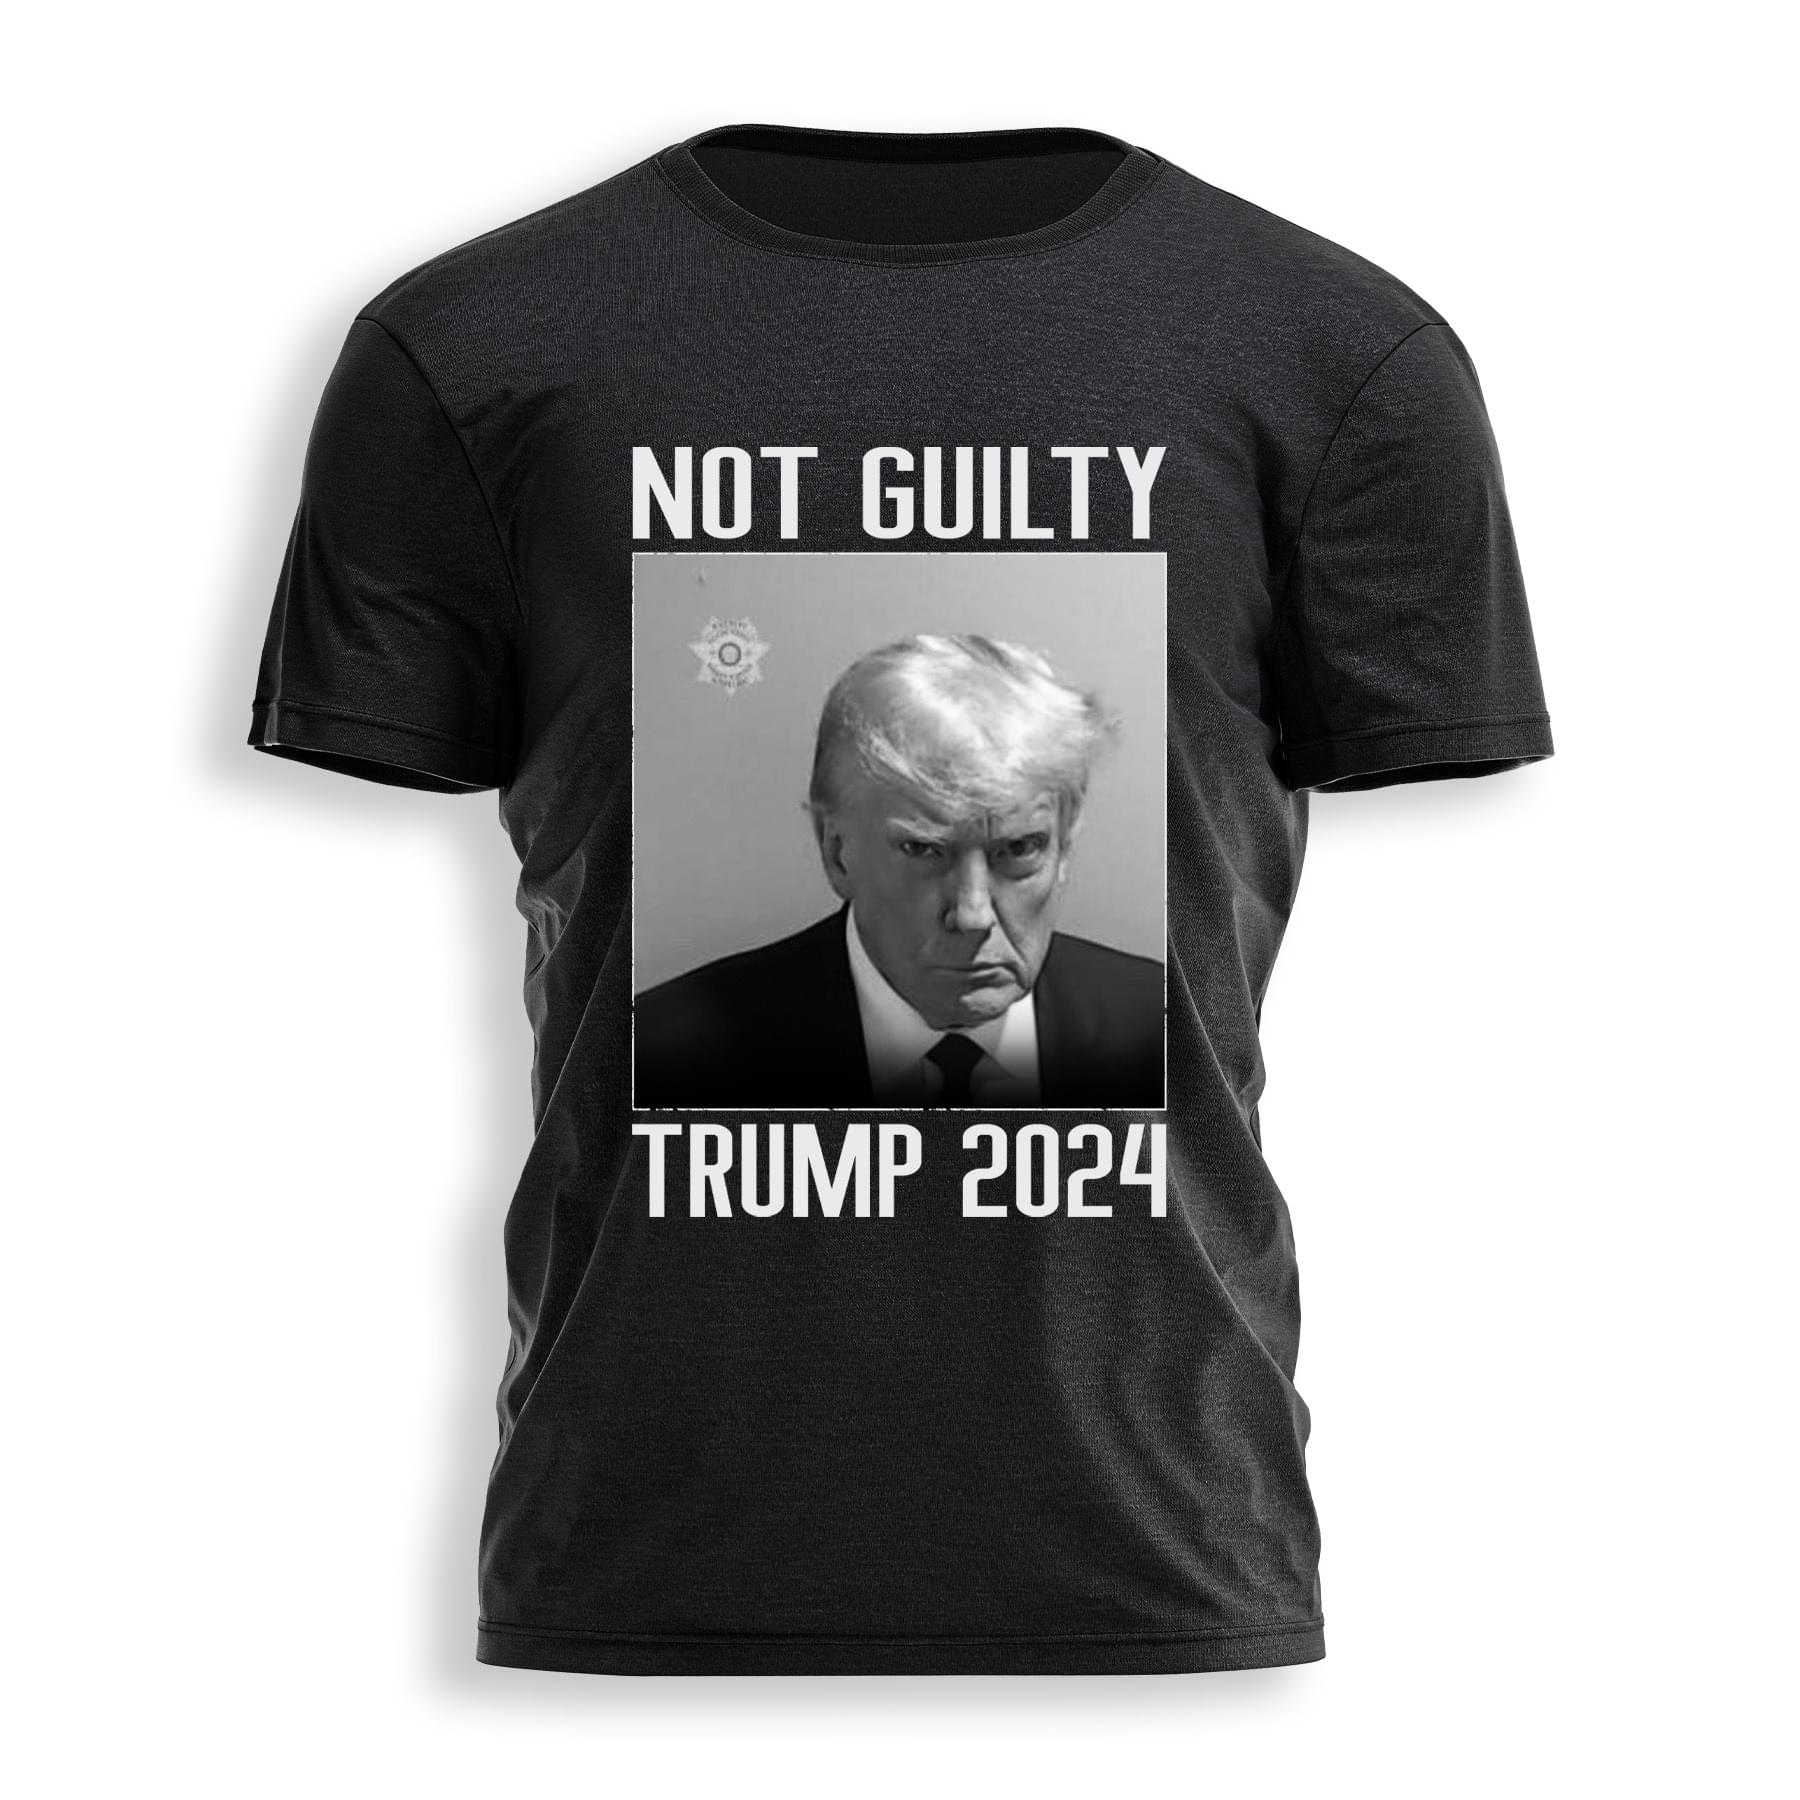 NOT GUILTY TRUMP 2024 T-Shirt Order Form